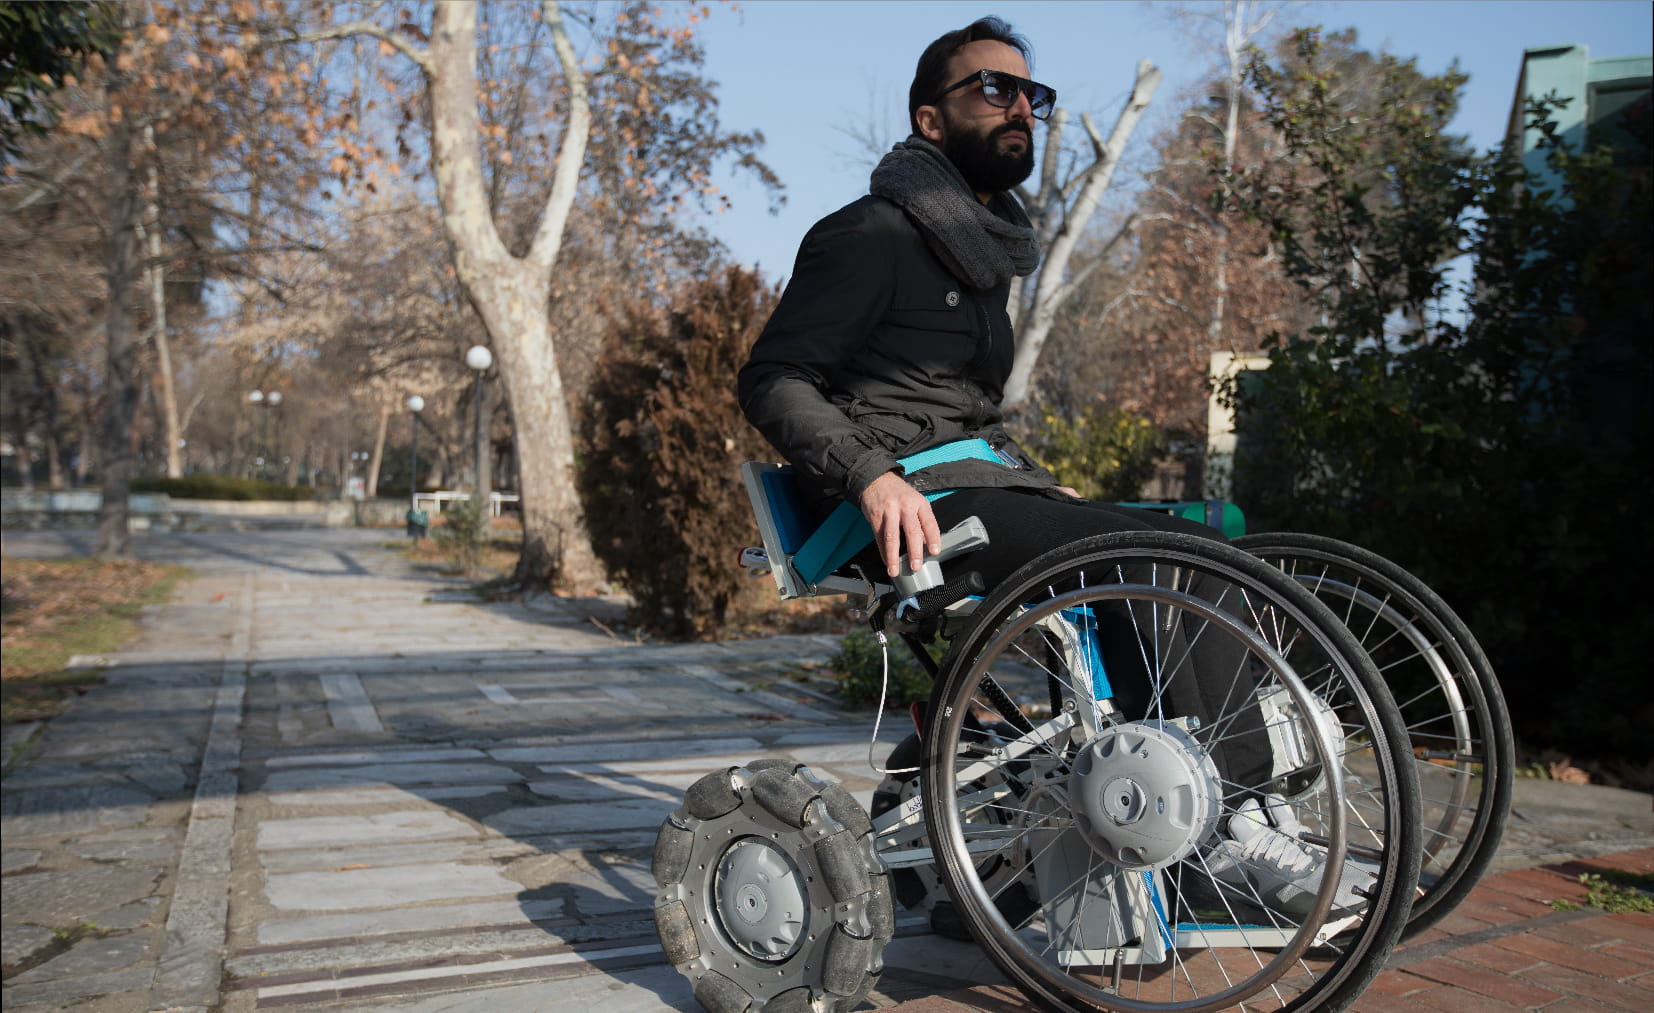 Ladroller: Το made-in-Greece επαναστατικό αναπηρικό αμαξίδιο